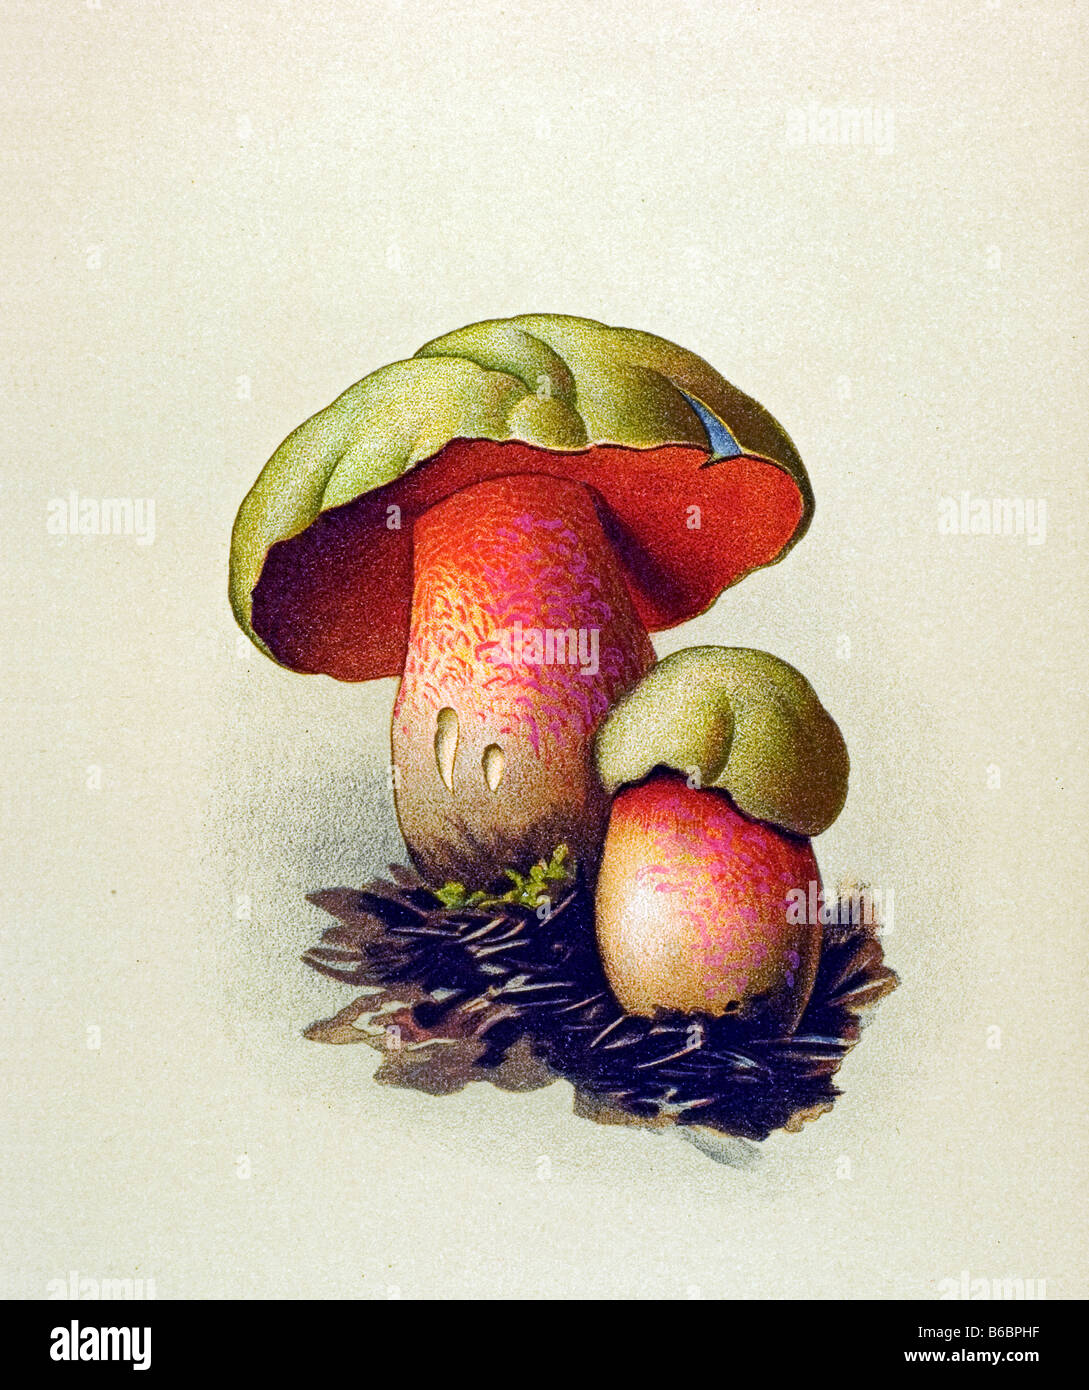 Boletus lupinus, poisonous parasitic mushrooms fungi illustrations Stock Photo